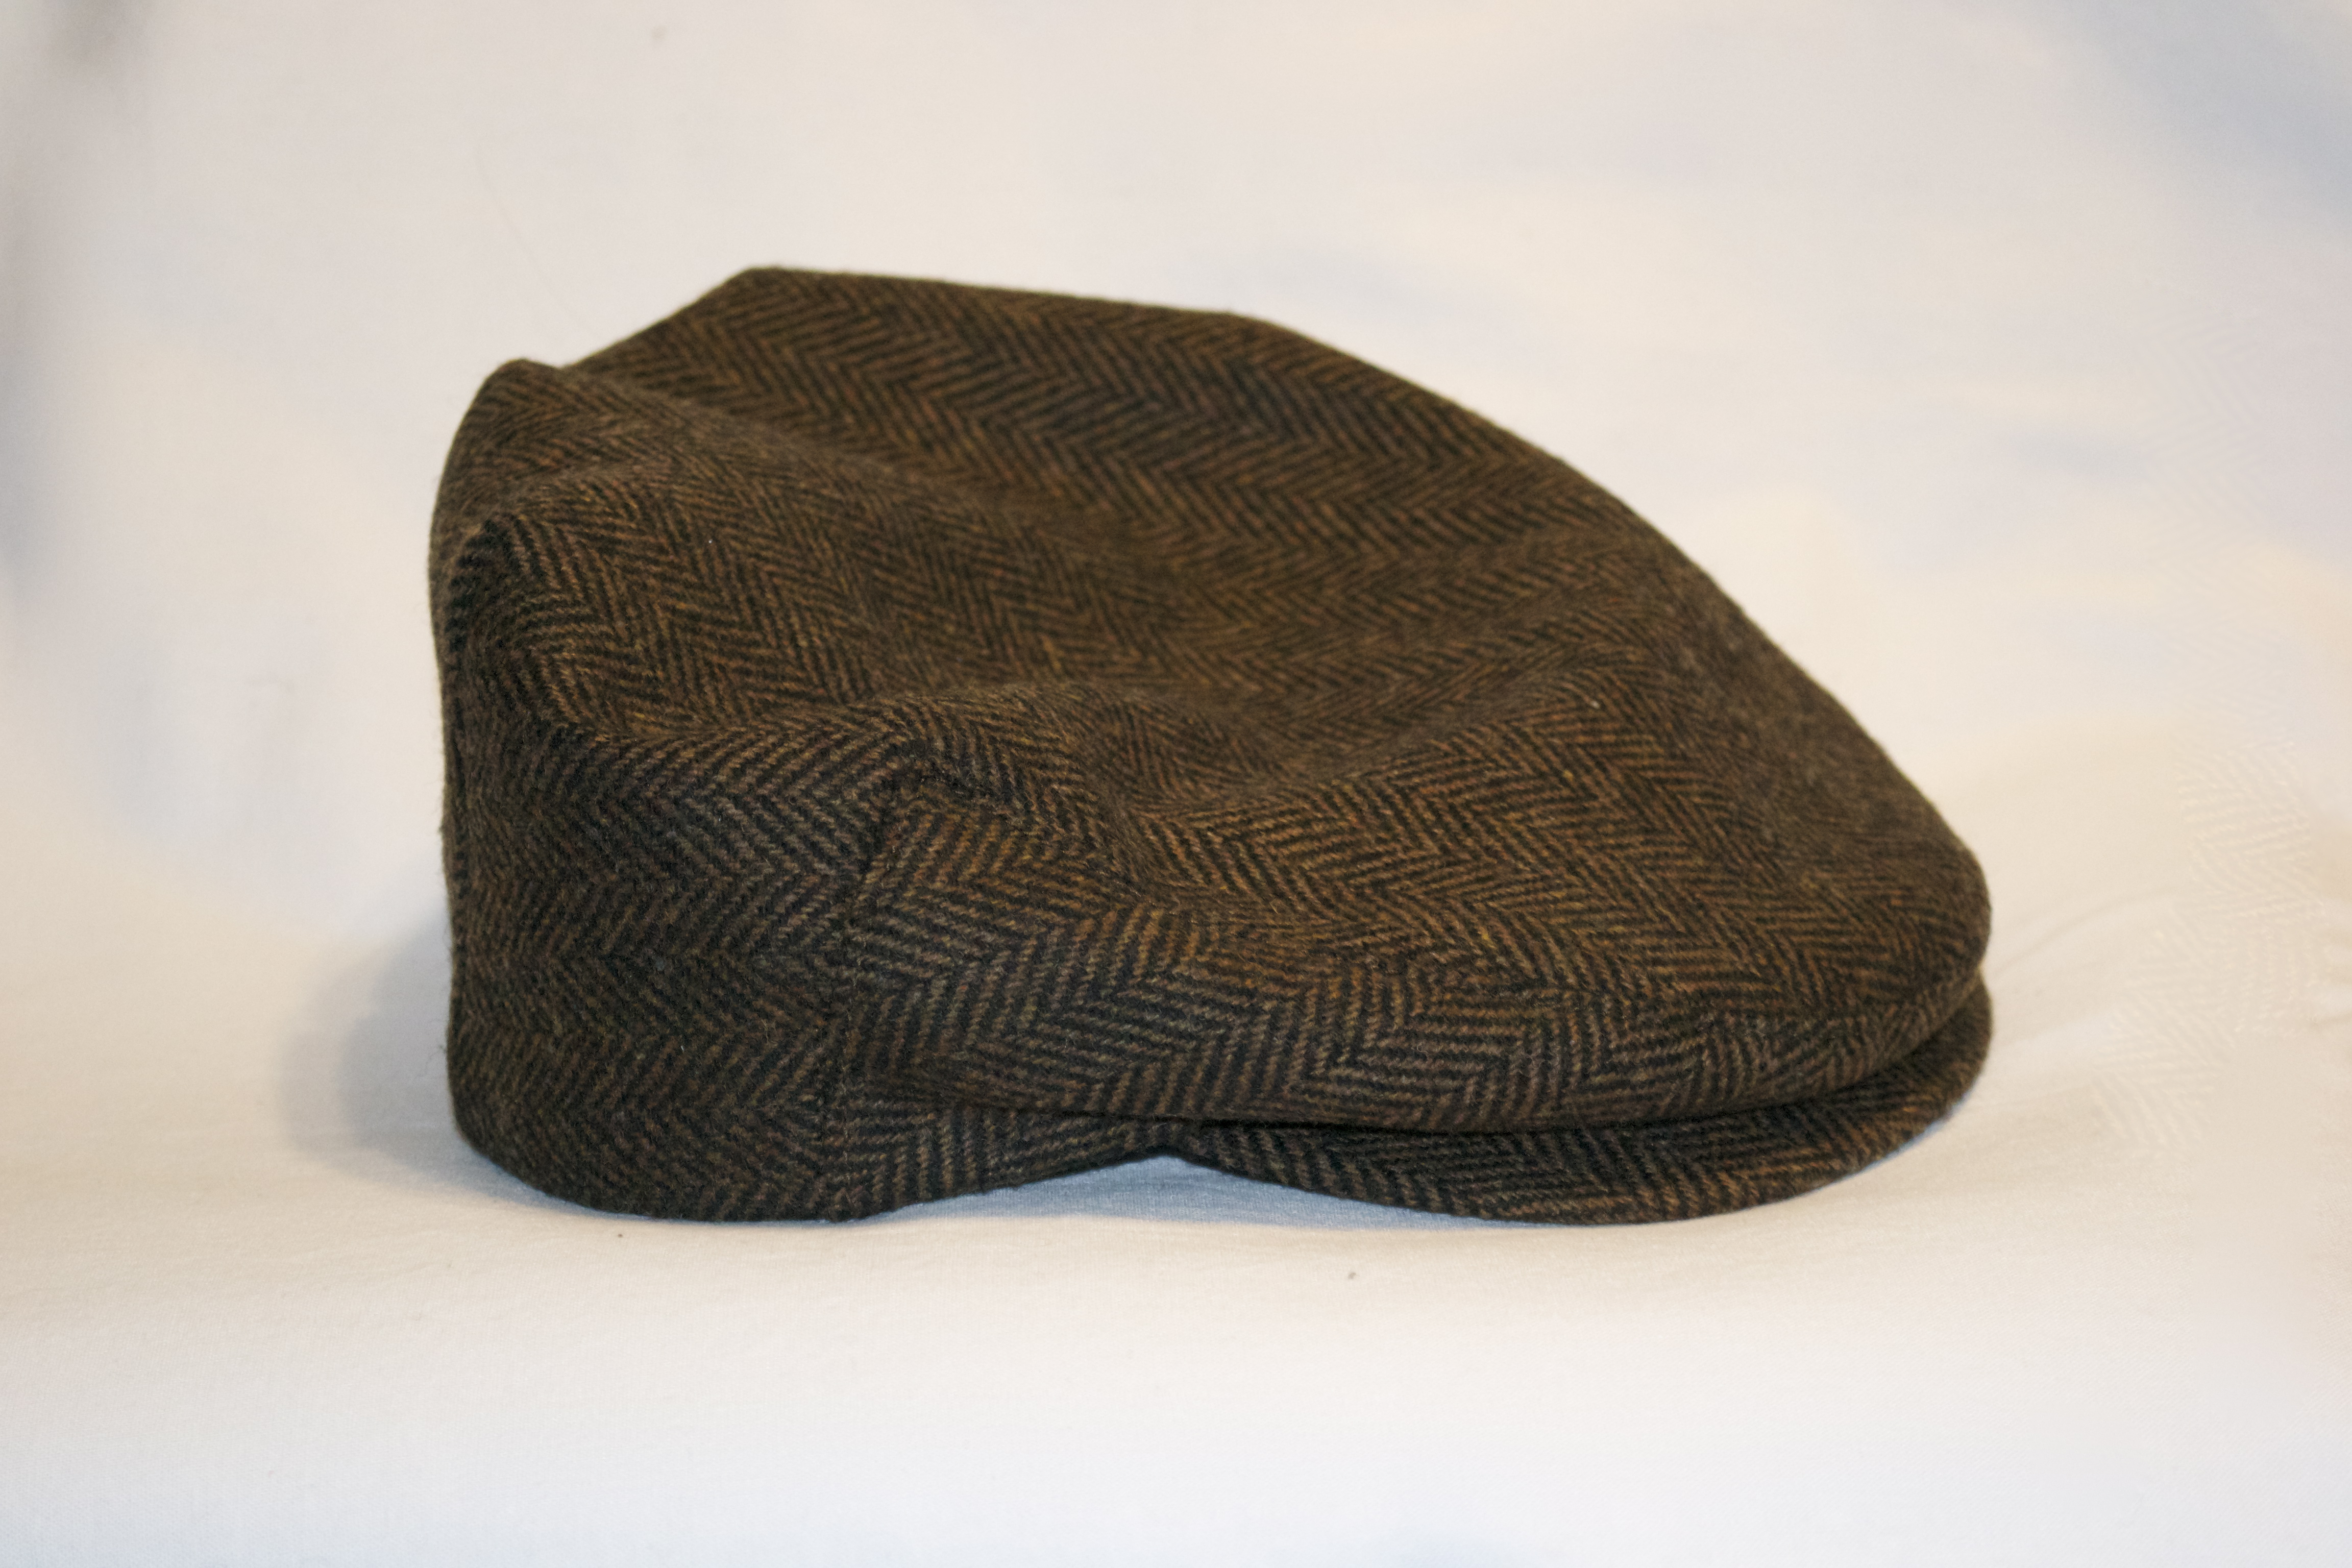 Hats In The Belfry via Men's Style Pro